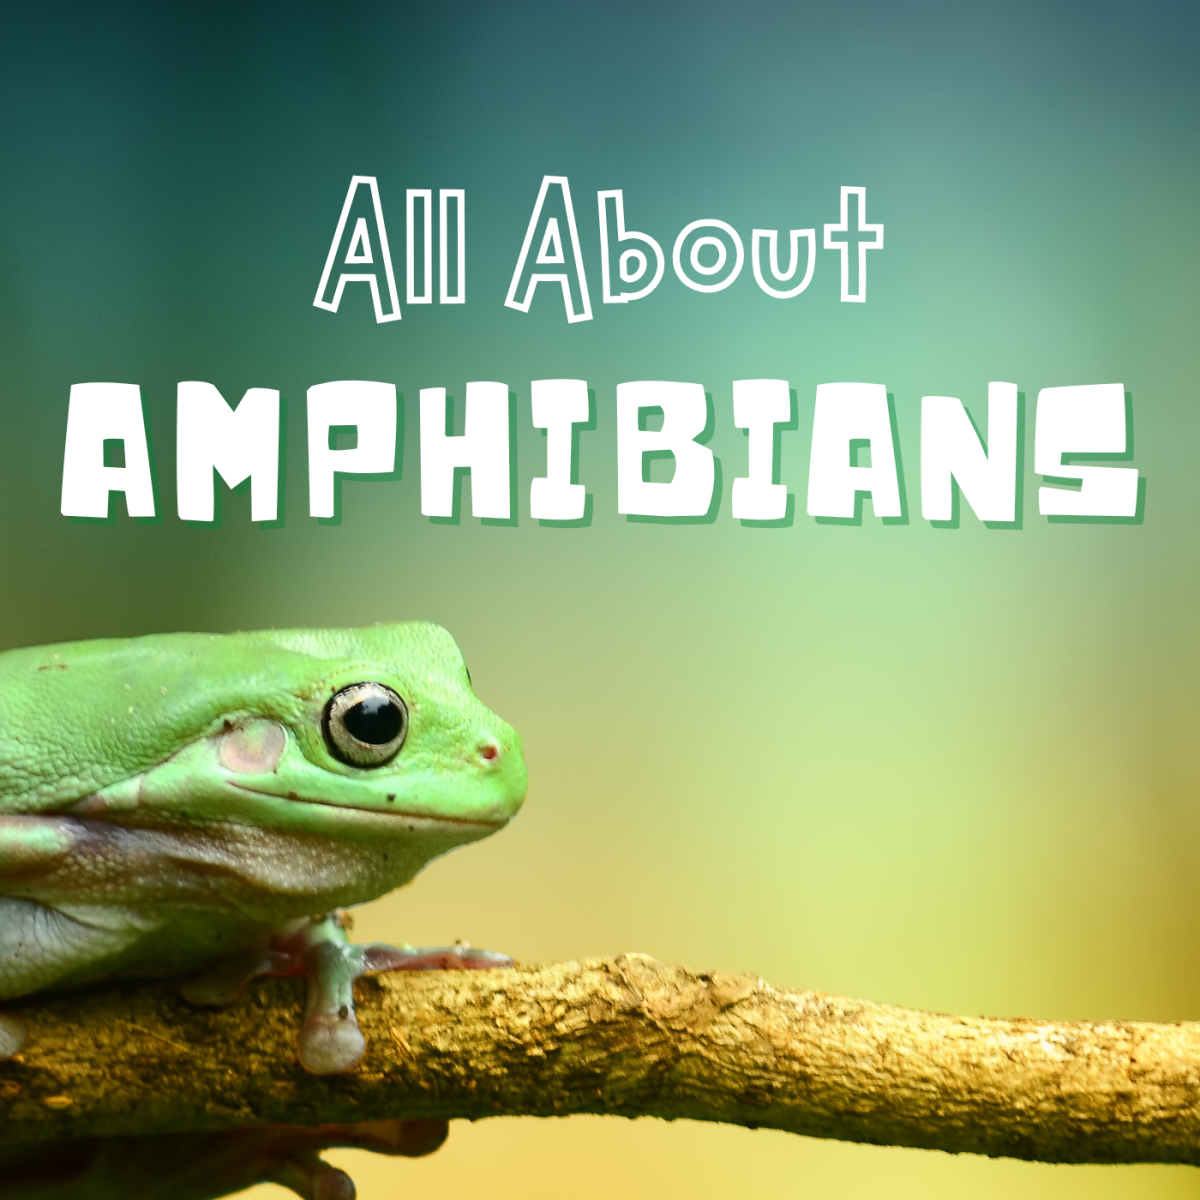 Let's Learn About Amphibians! - Owlcation